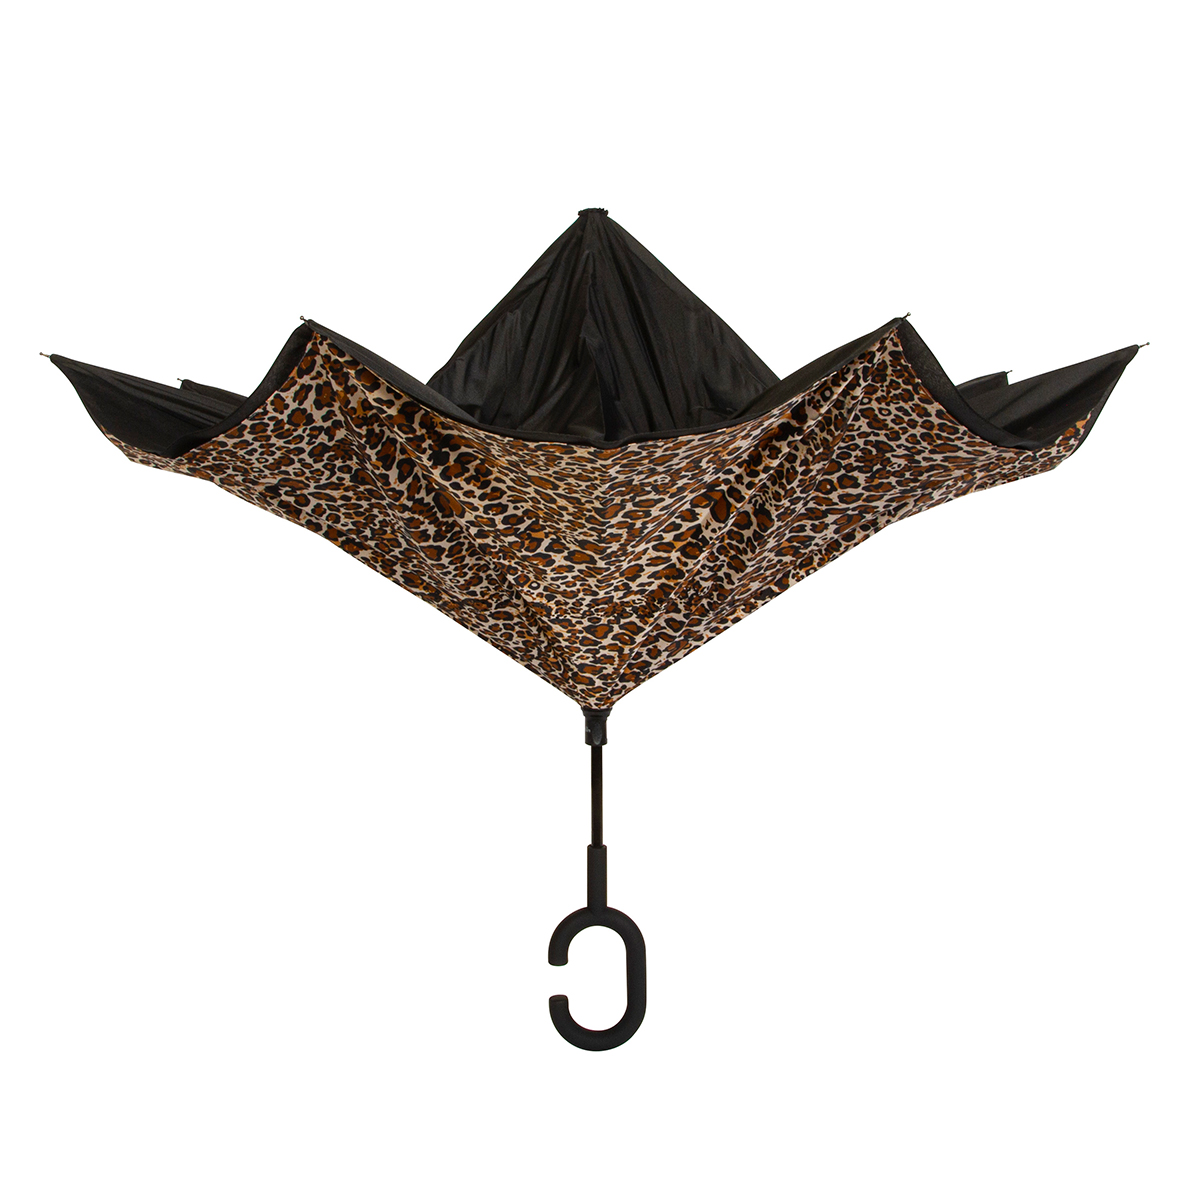 ShedRain Unbelievabrella(tm) 48in. Stick Umbrella - Black/Leopard